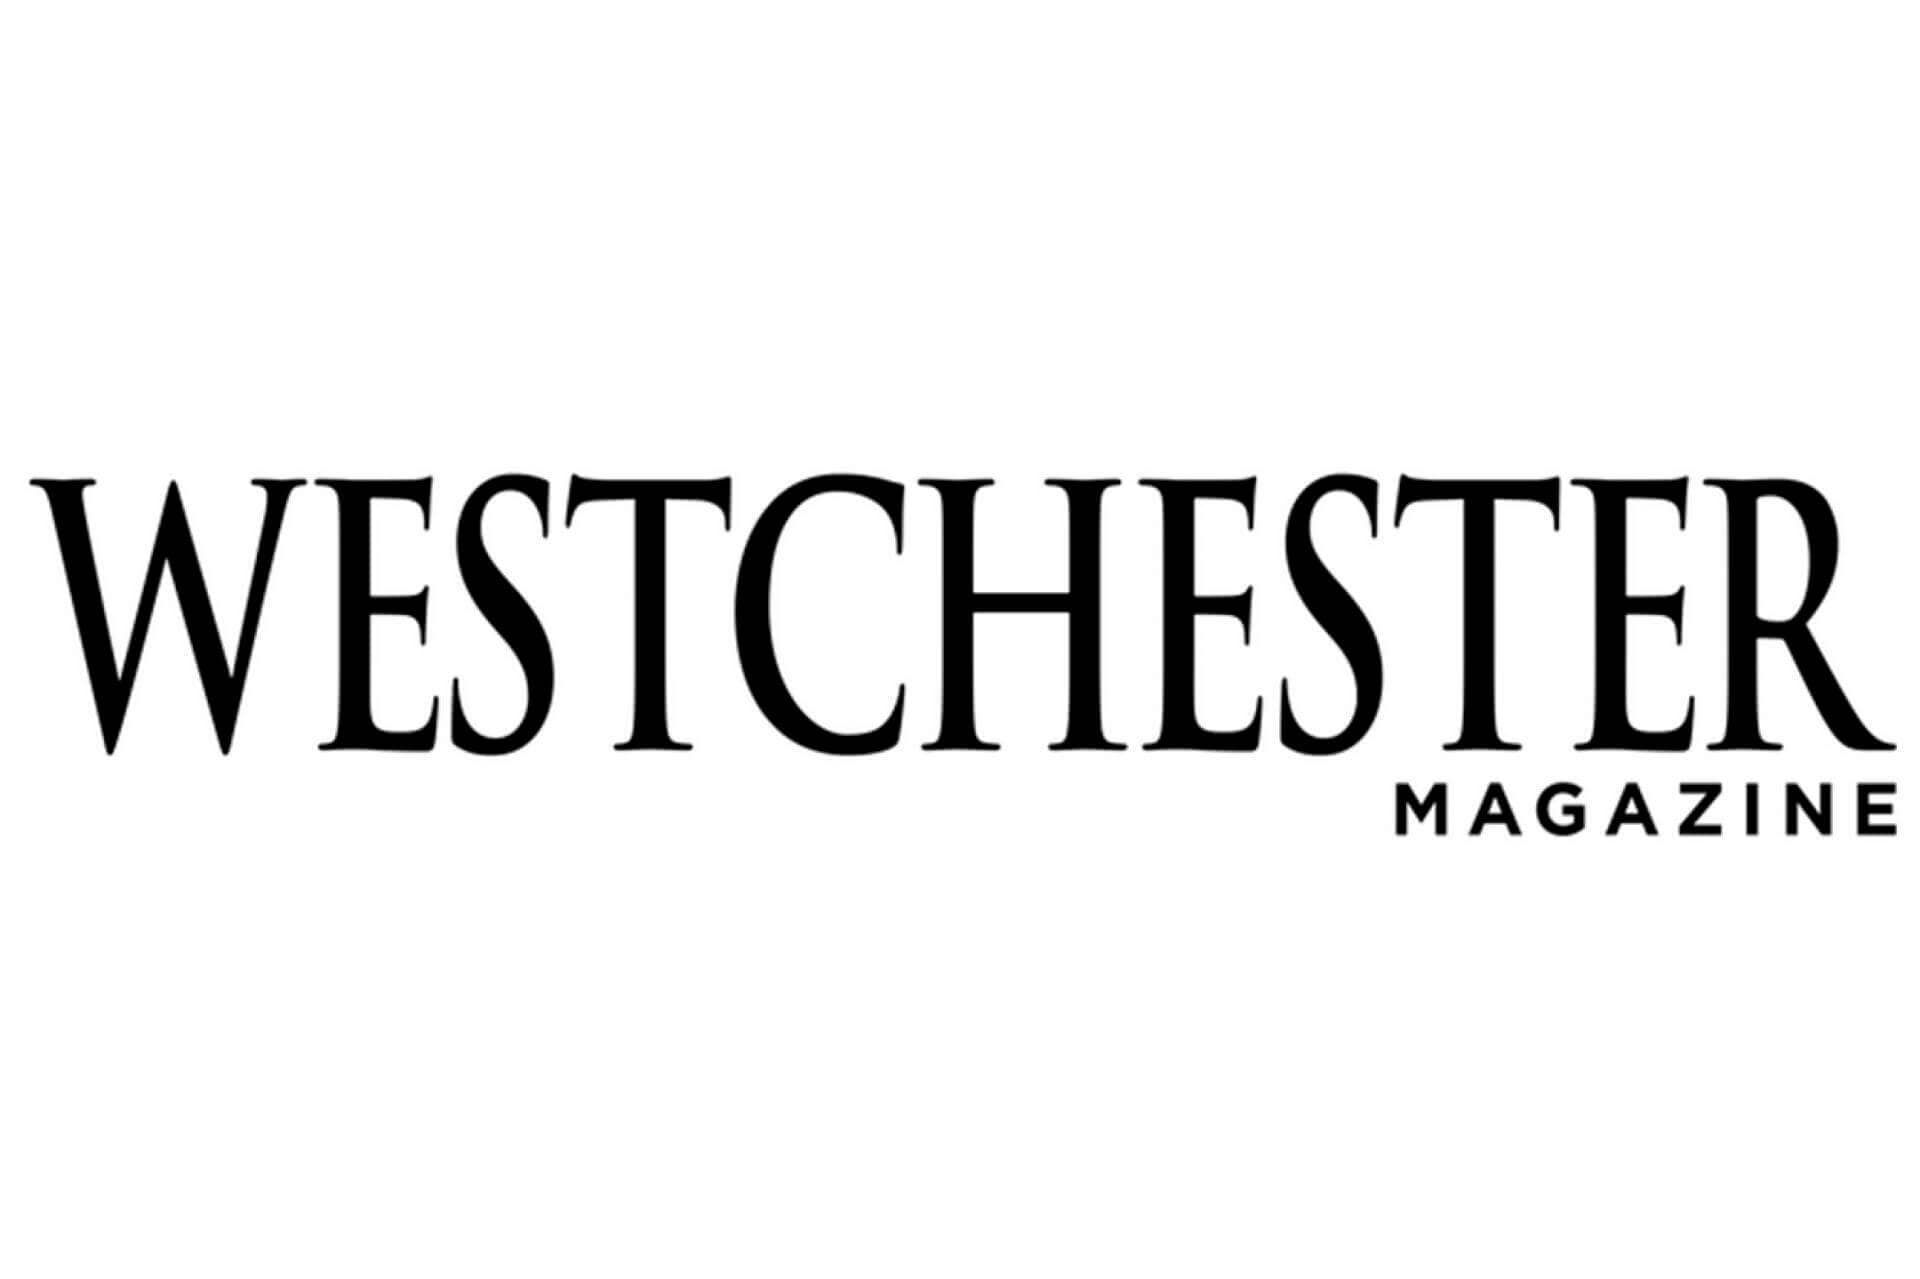 WestchesterMagazine